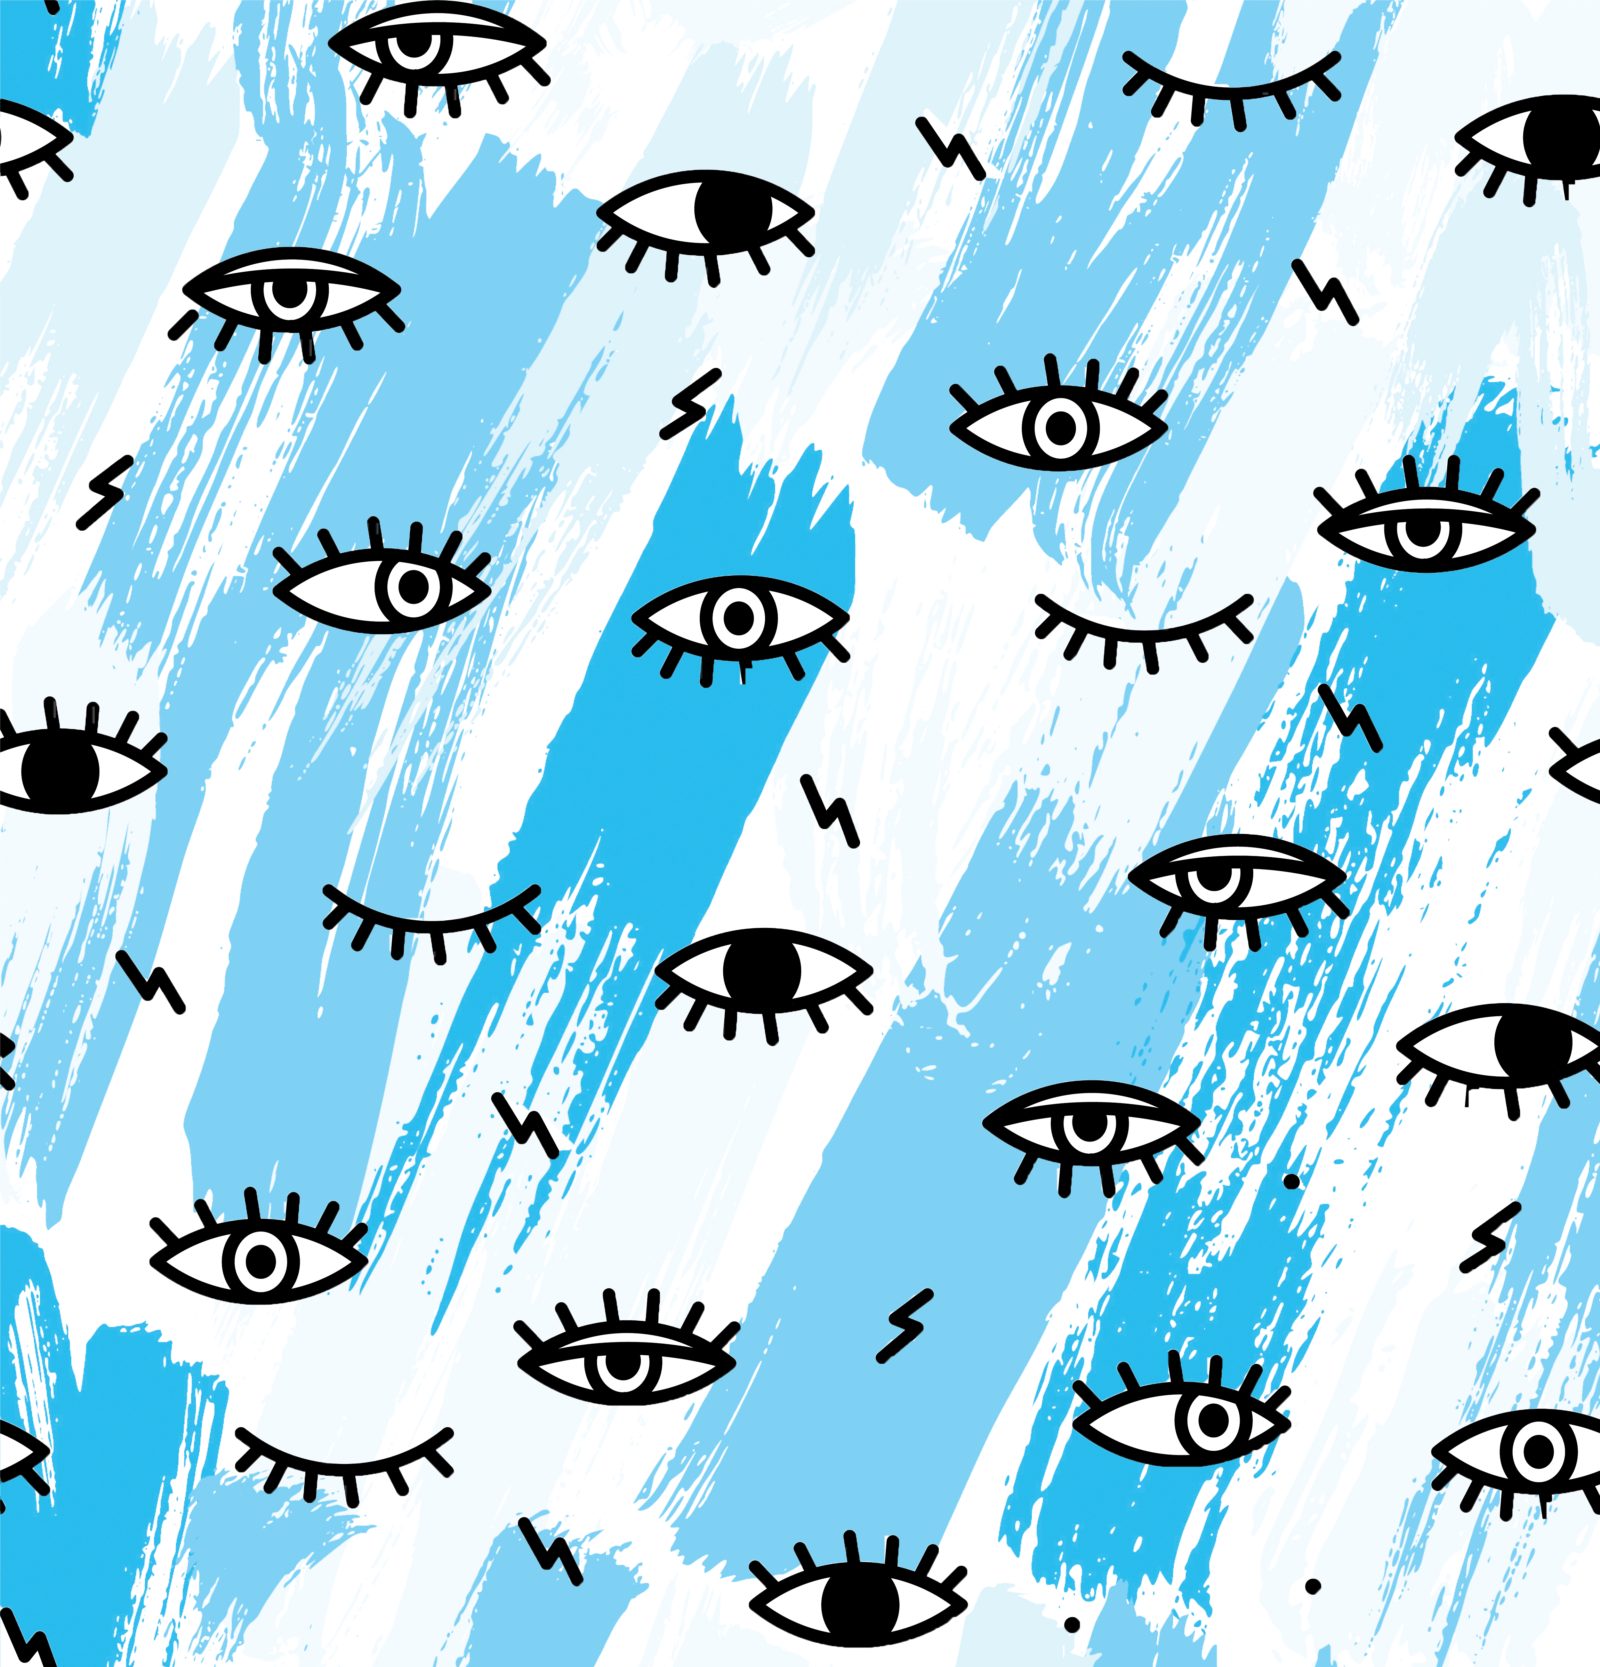 pattern of eyes over blue paint splash background